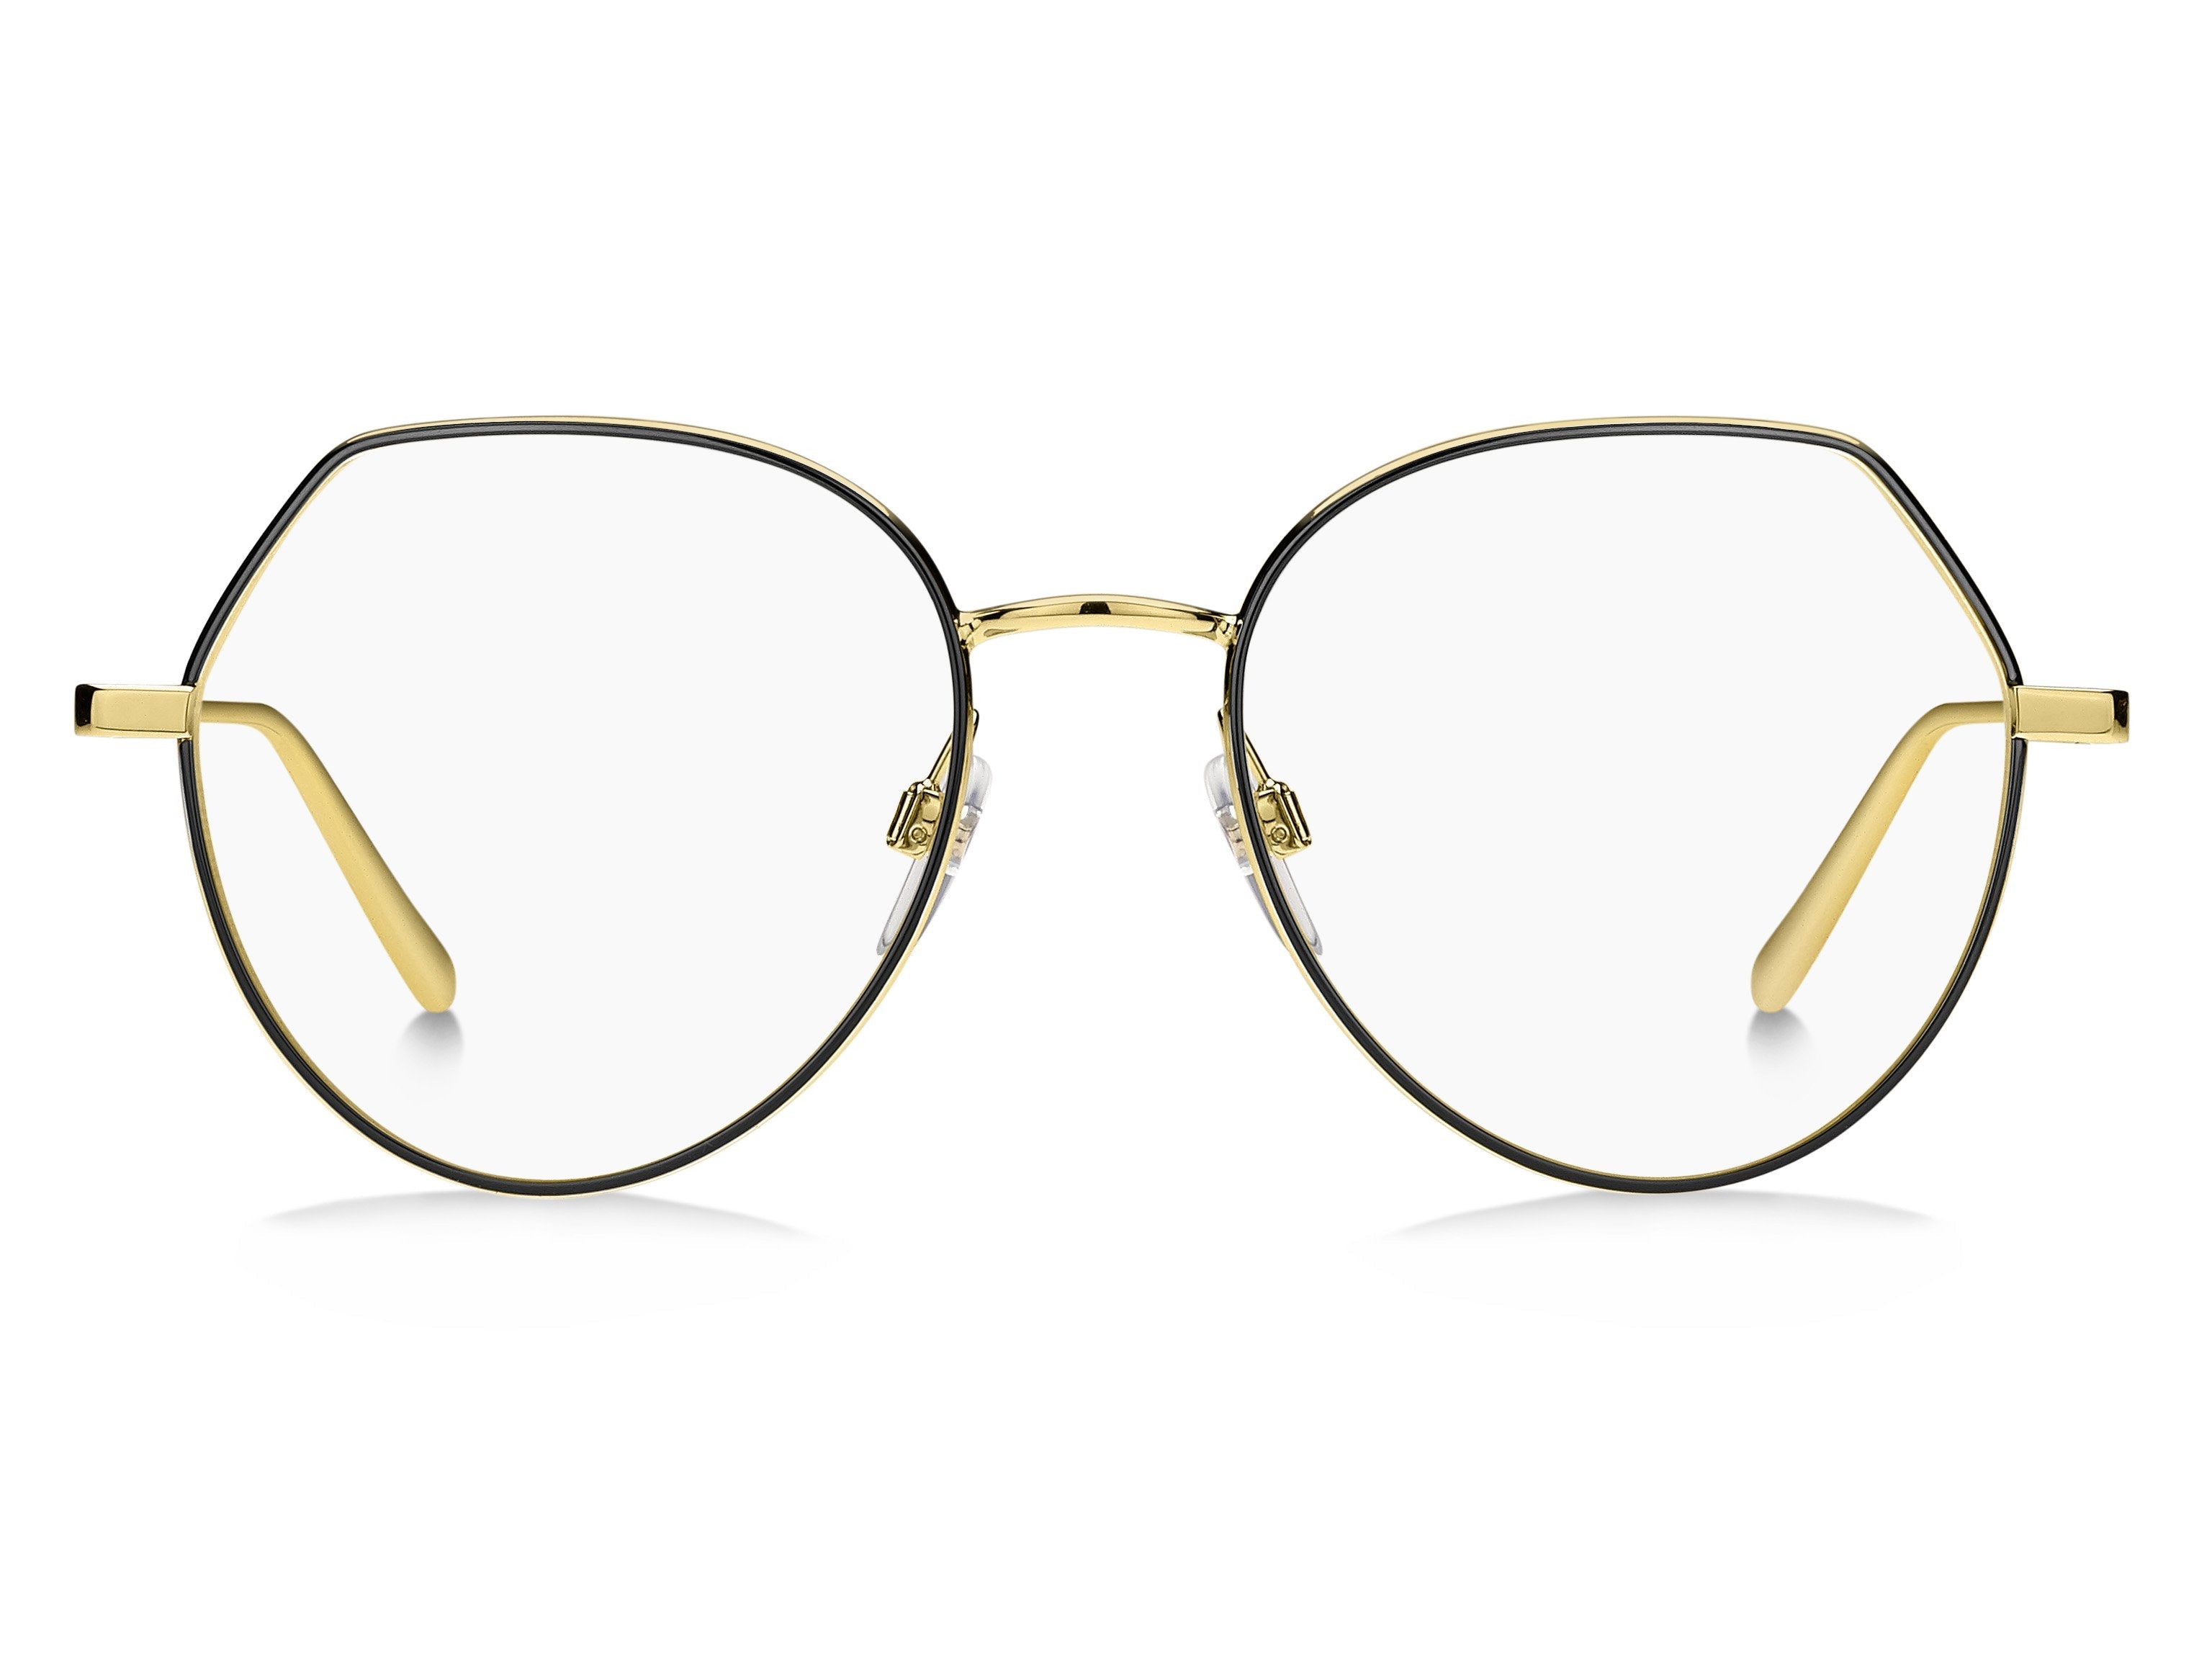 Marc Jacobs Eyeglasses Round Woman